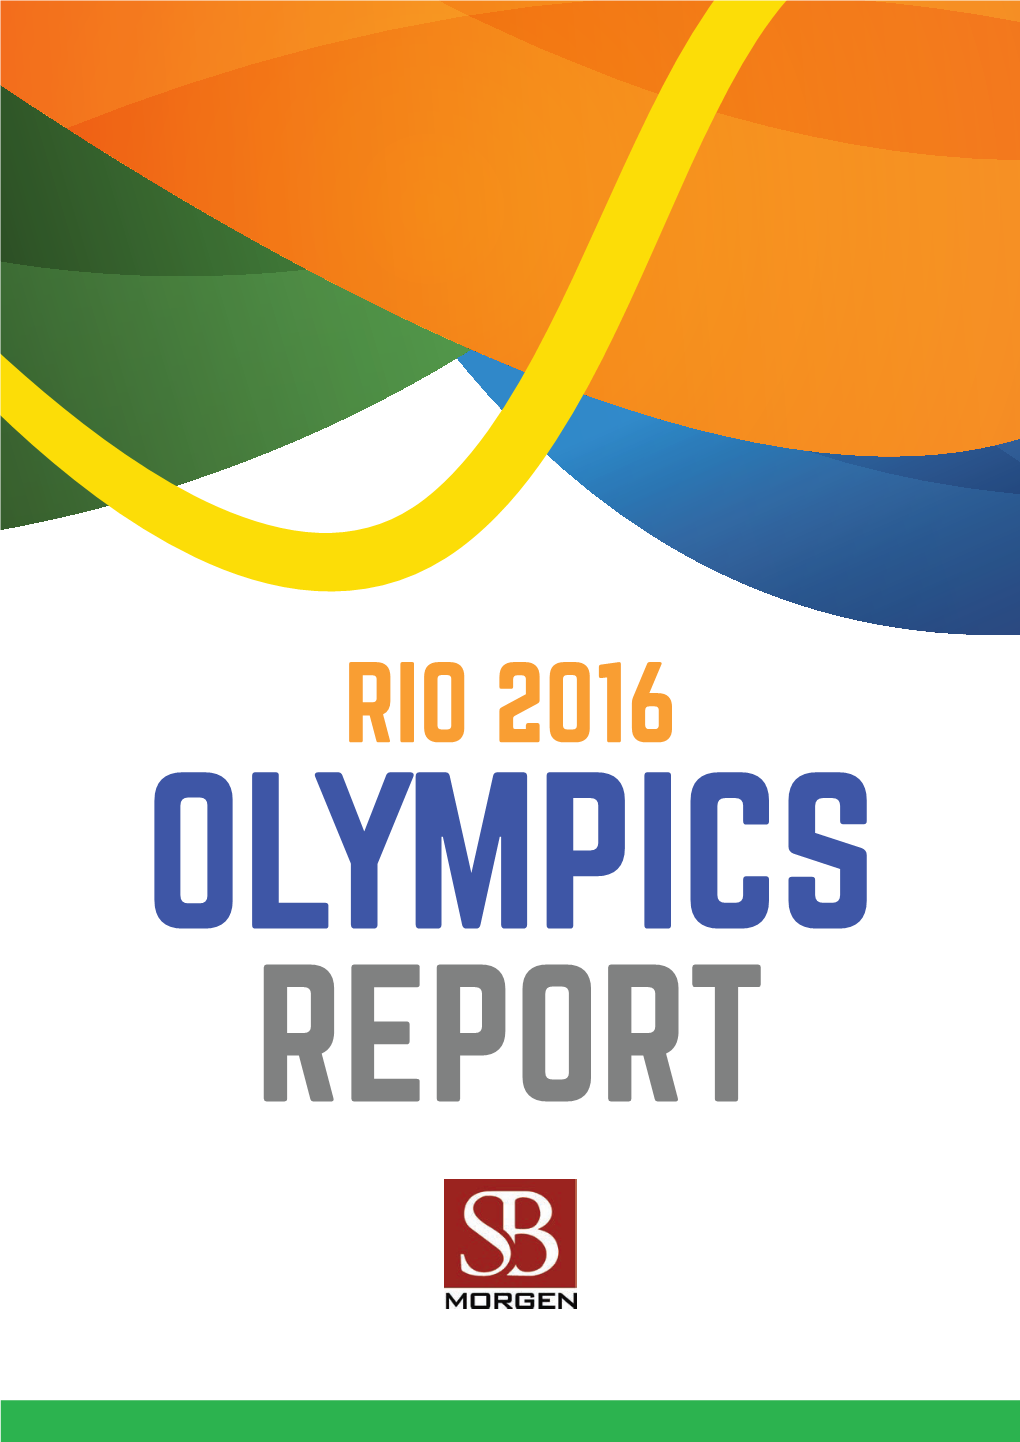 RIO 2016 OLYMPICS REPORT Disclaimer